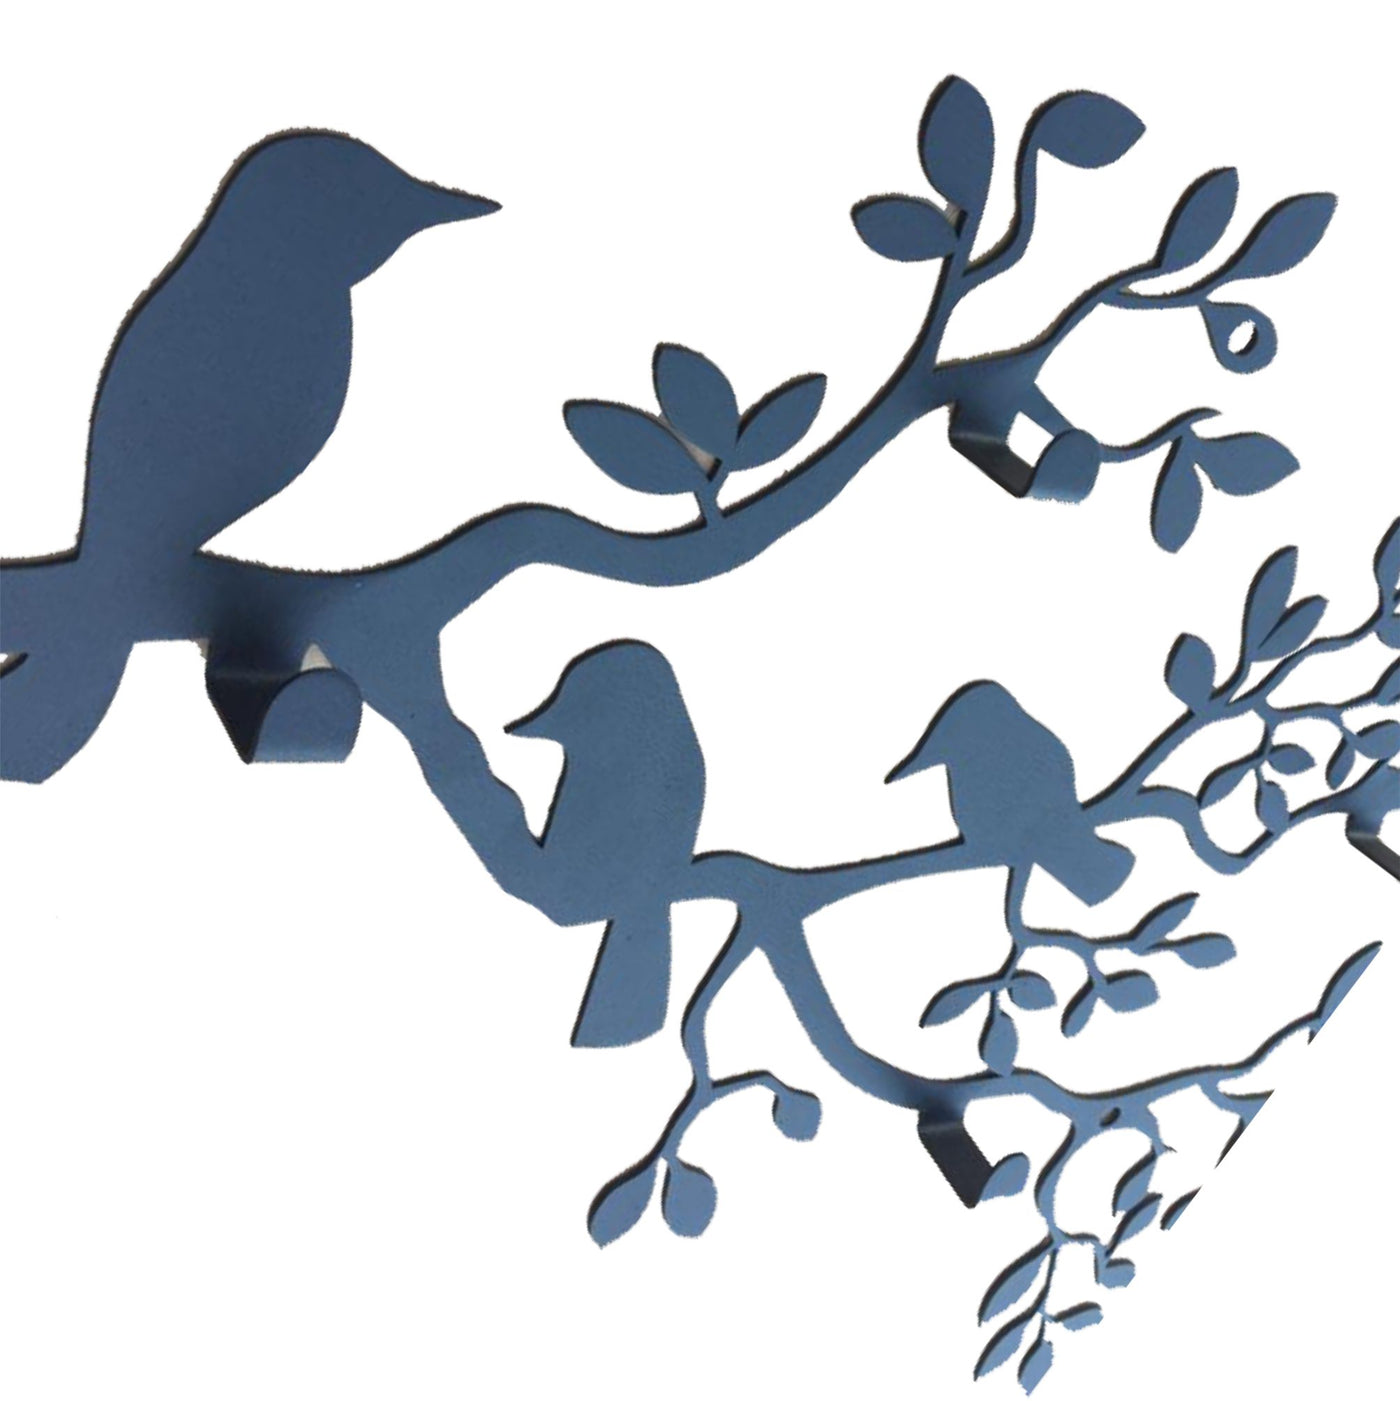 Perchero Metálico Branch and Birds, Colgador de Pared